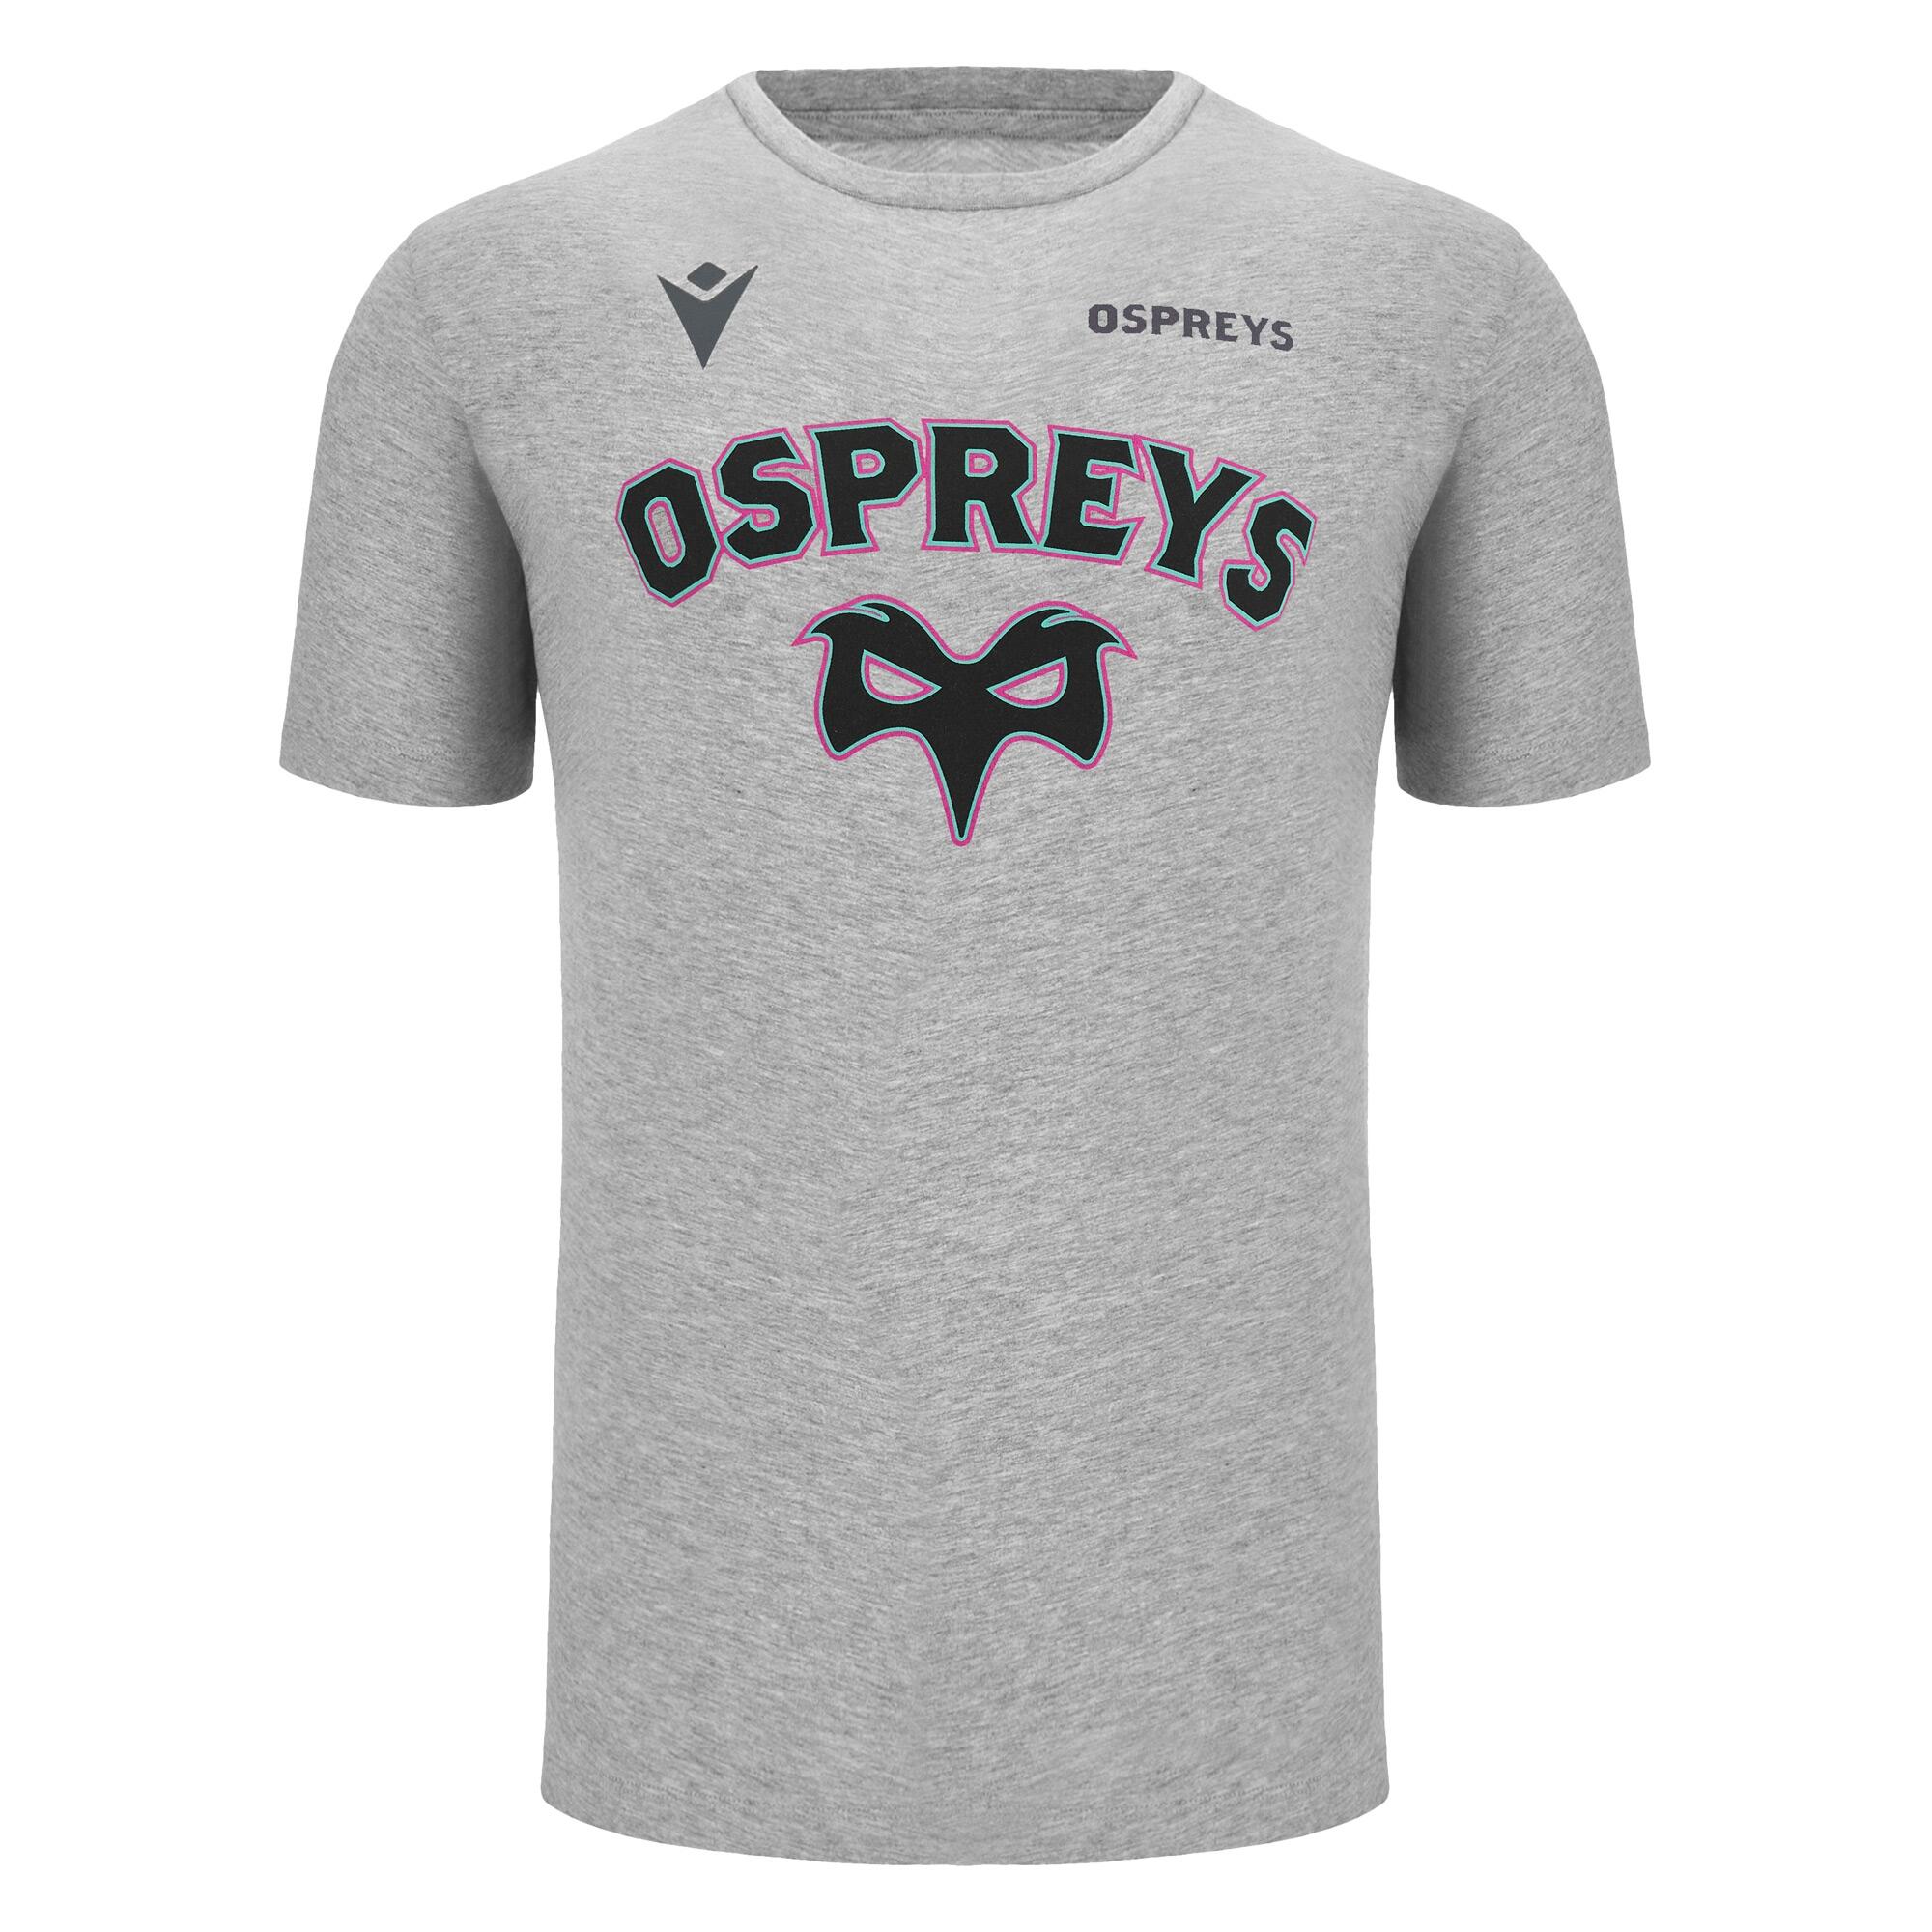 MACRON Macron Ospreys 23/24 Kids Leisure Cotton T Shirt